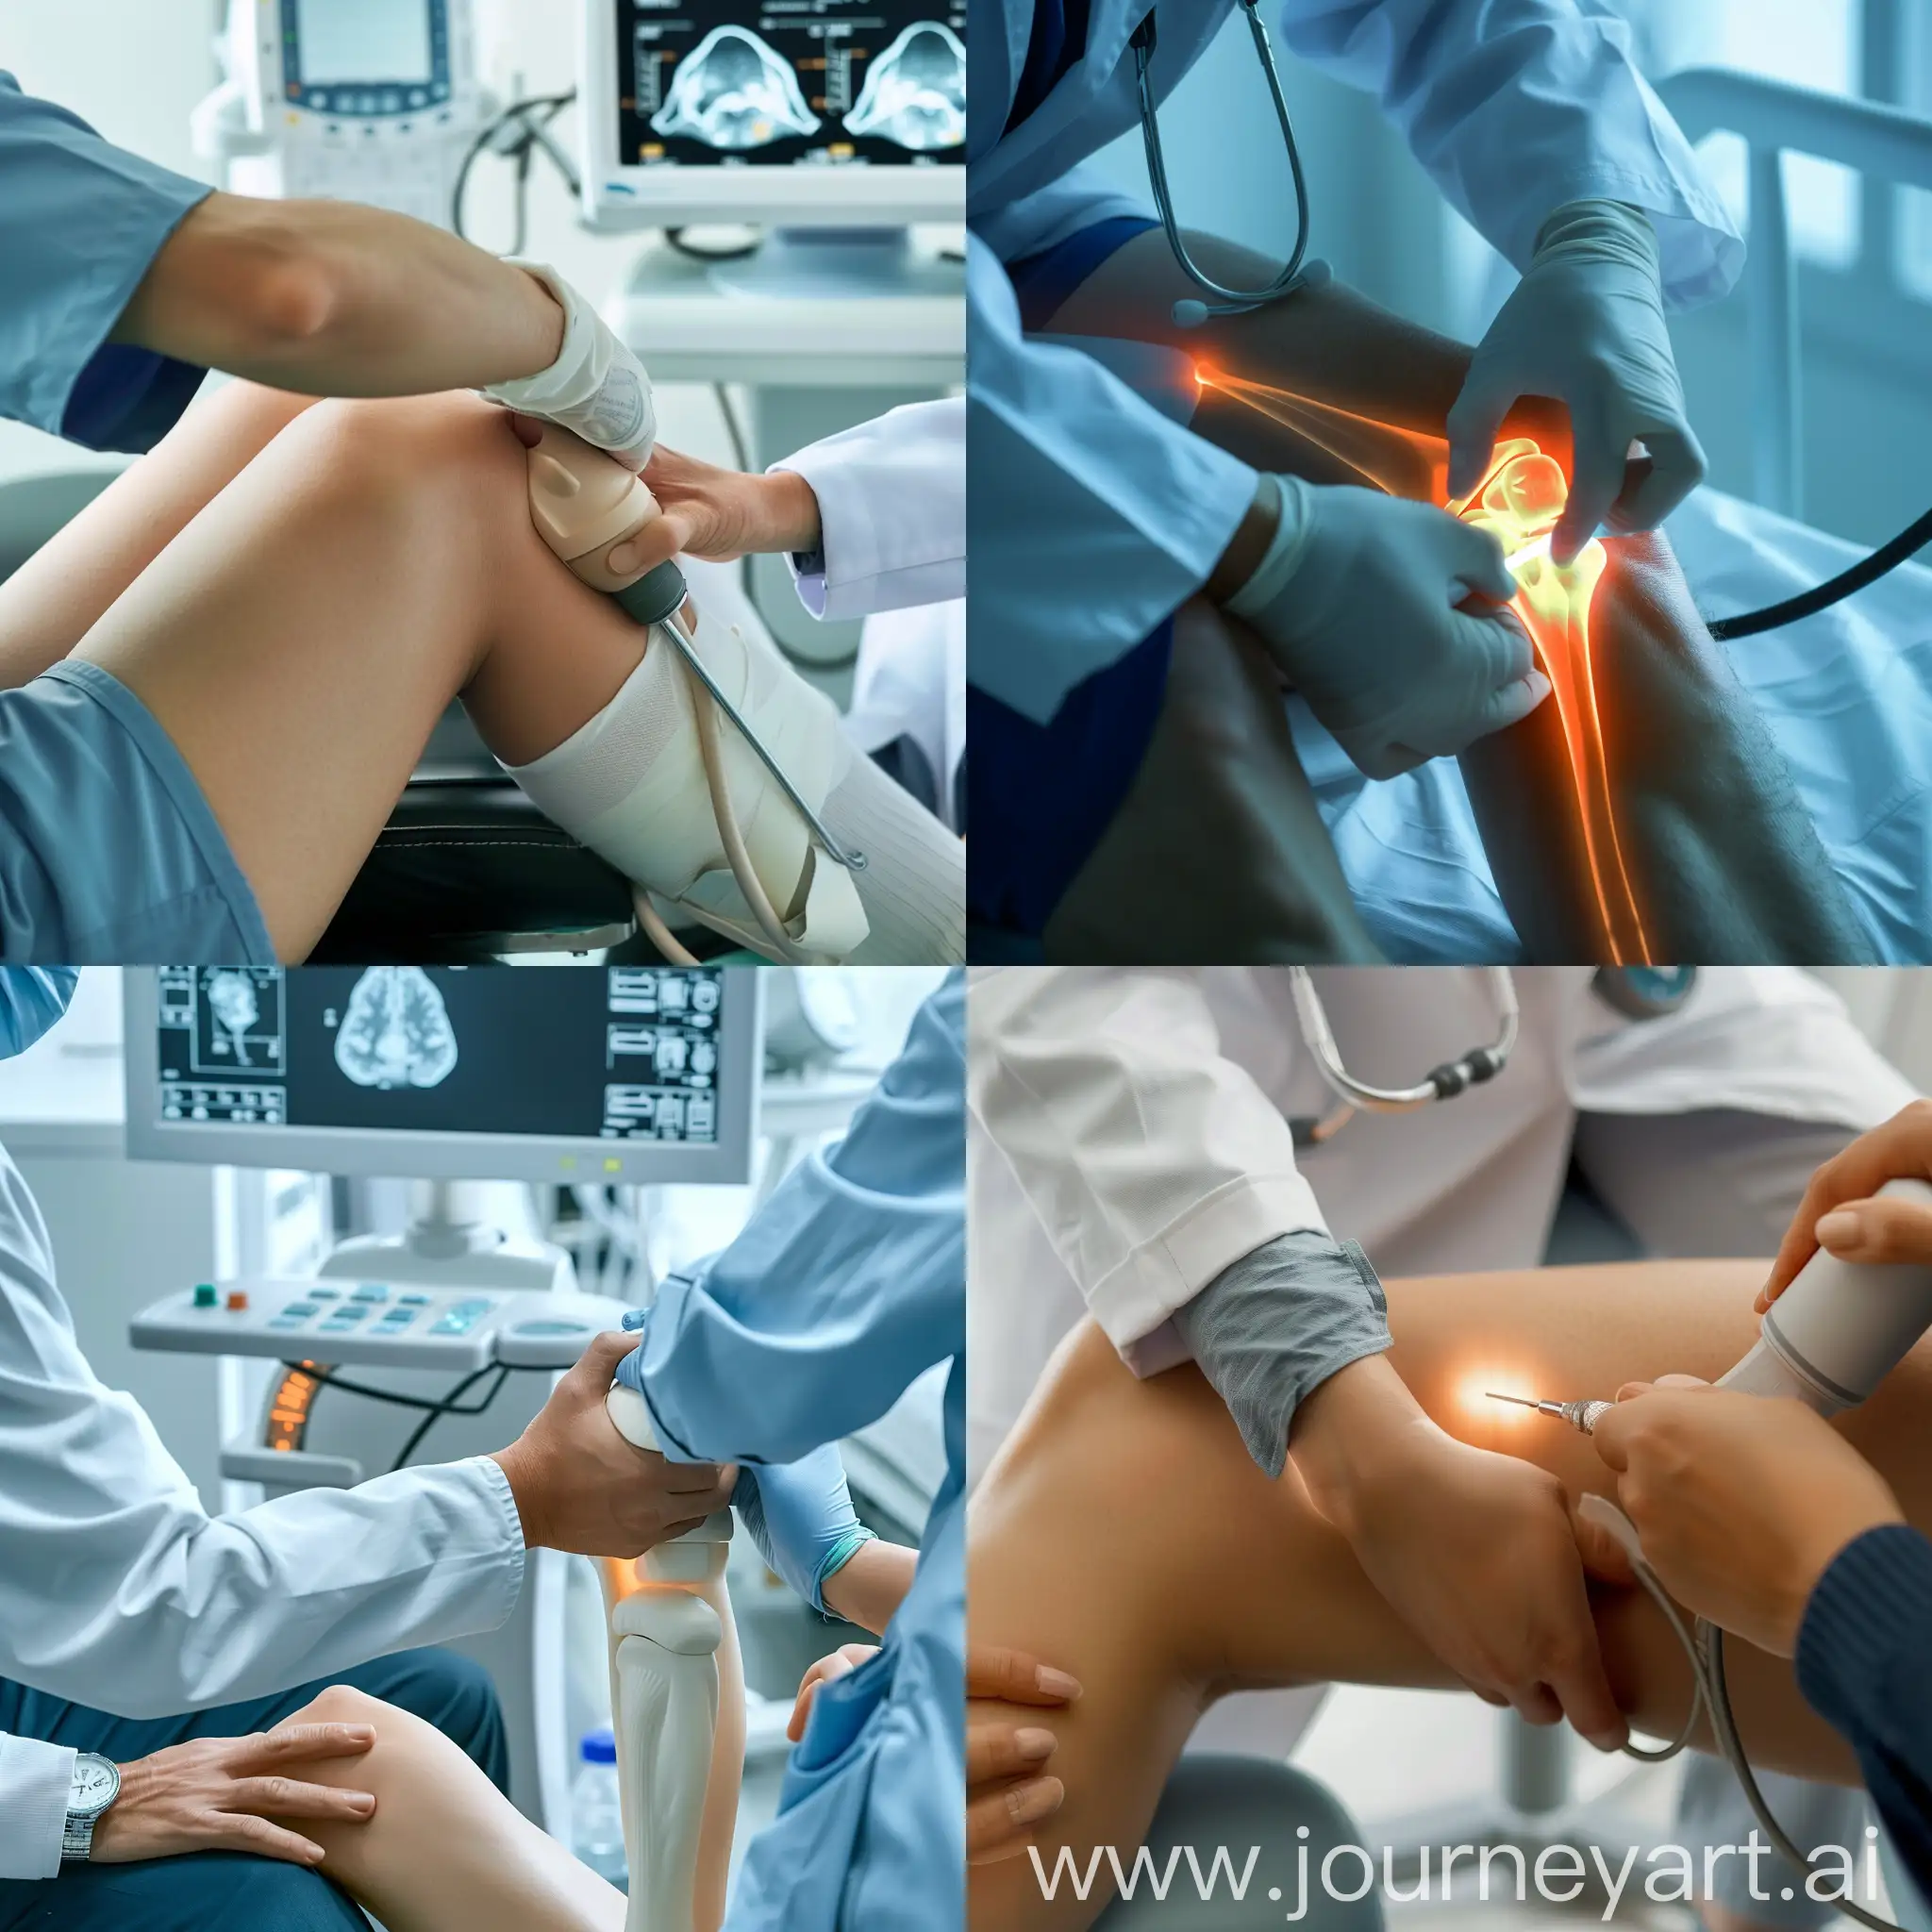 фото процесса где врач делает пациенту  узи колена